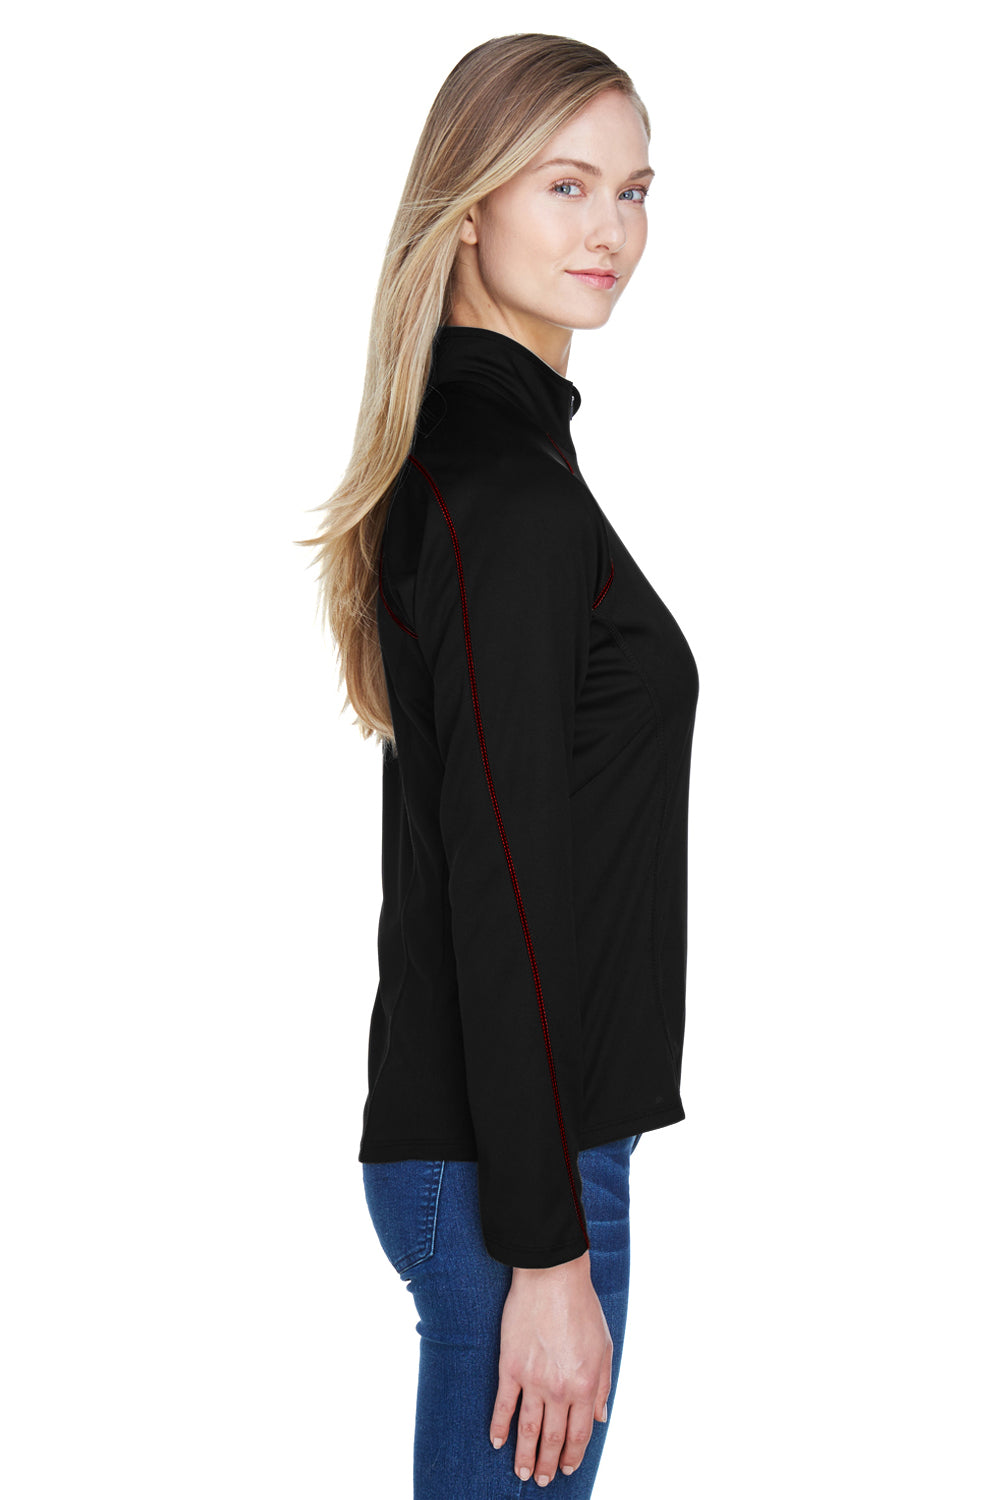 North End 78187 Womens Radar Performance Moisture Wicking 1/4 Zip Sweatshirt Black/Red Side